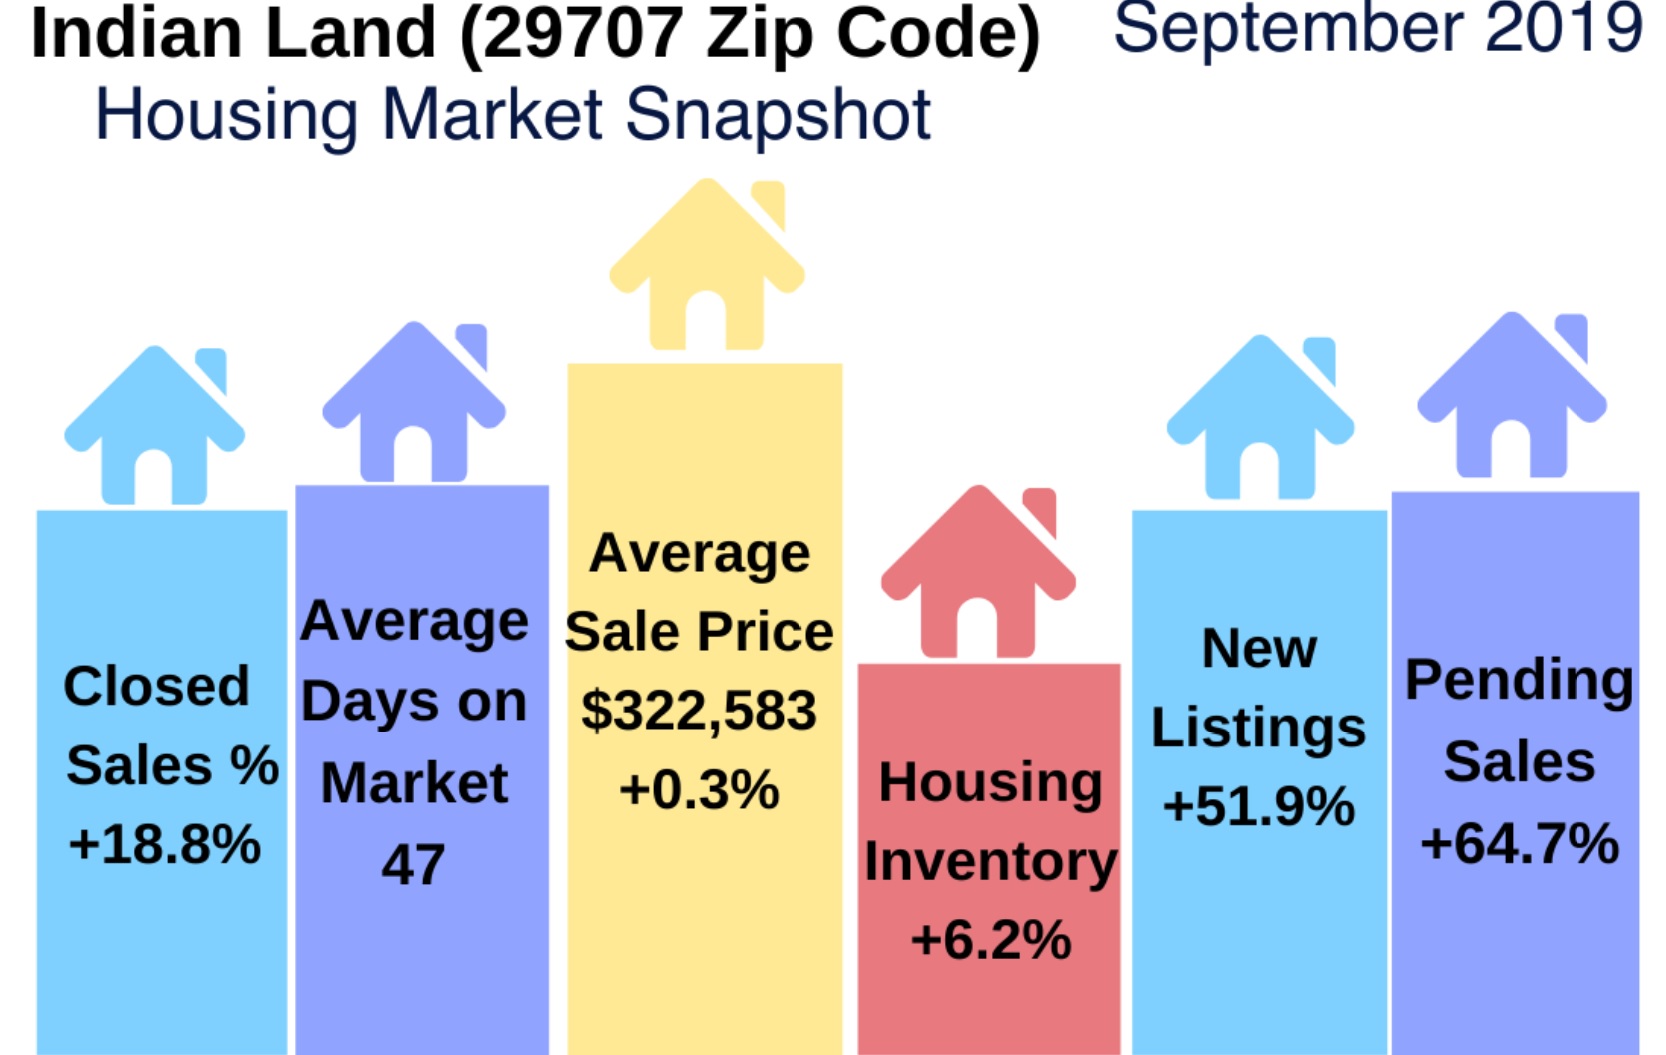 Indian Land (29707 Zip Code) Real Estate Report: September 2019